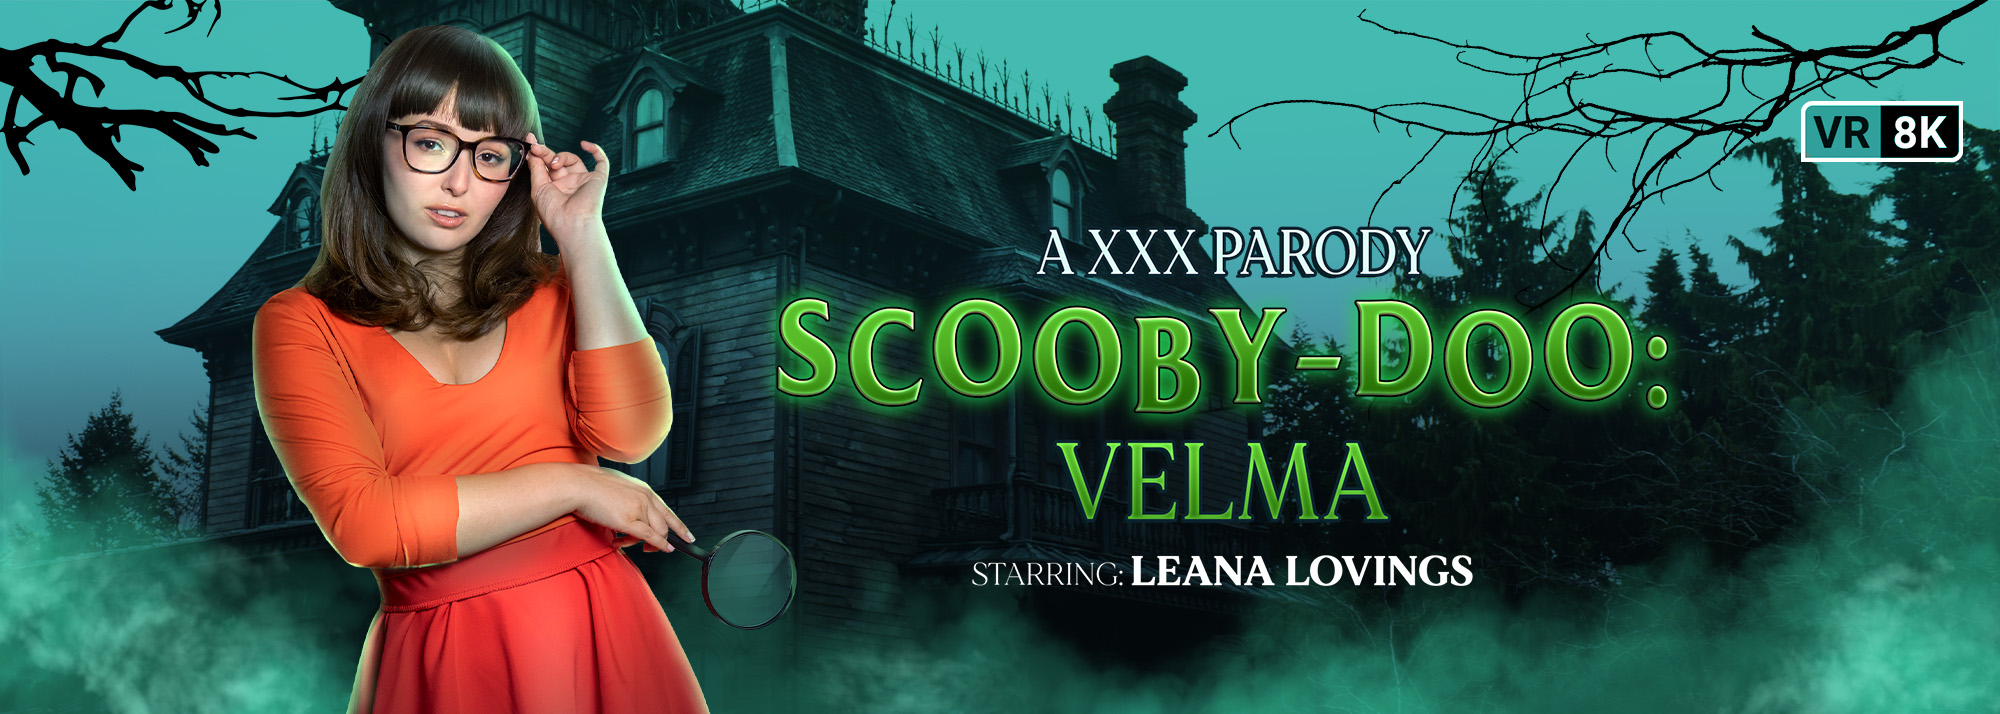 Scooby-Doo: Velma Porn Parody - VR Porn Video, Starring: Leana Lovings VR